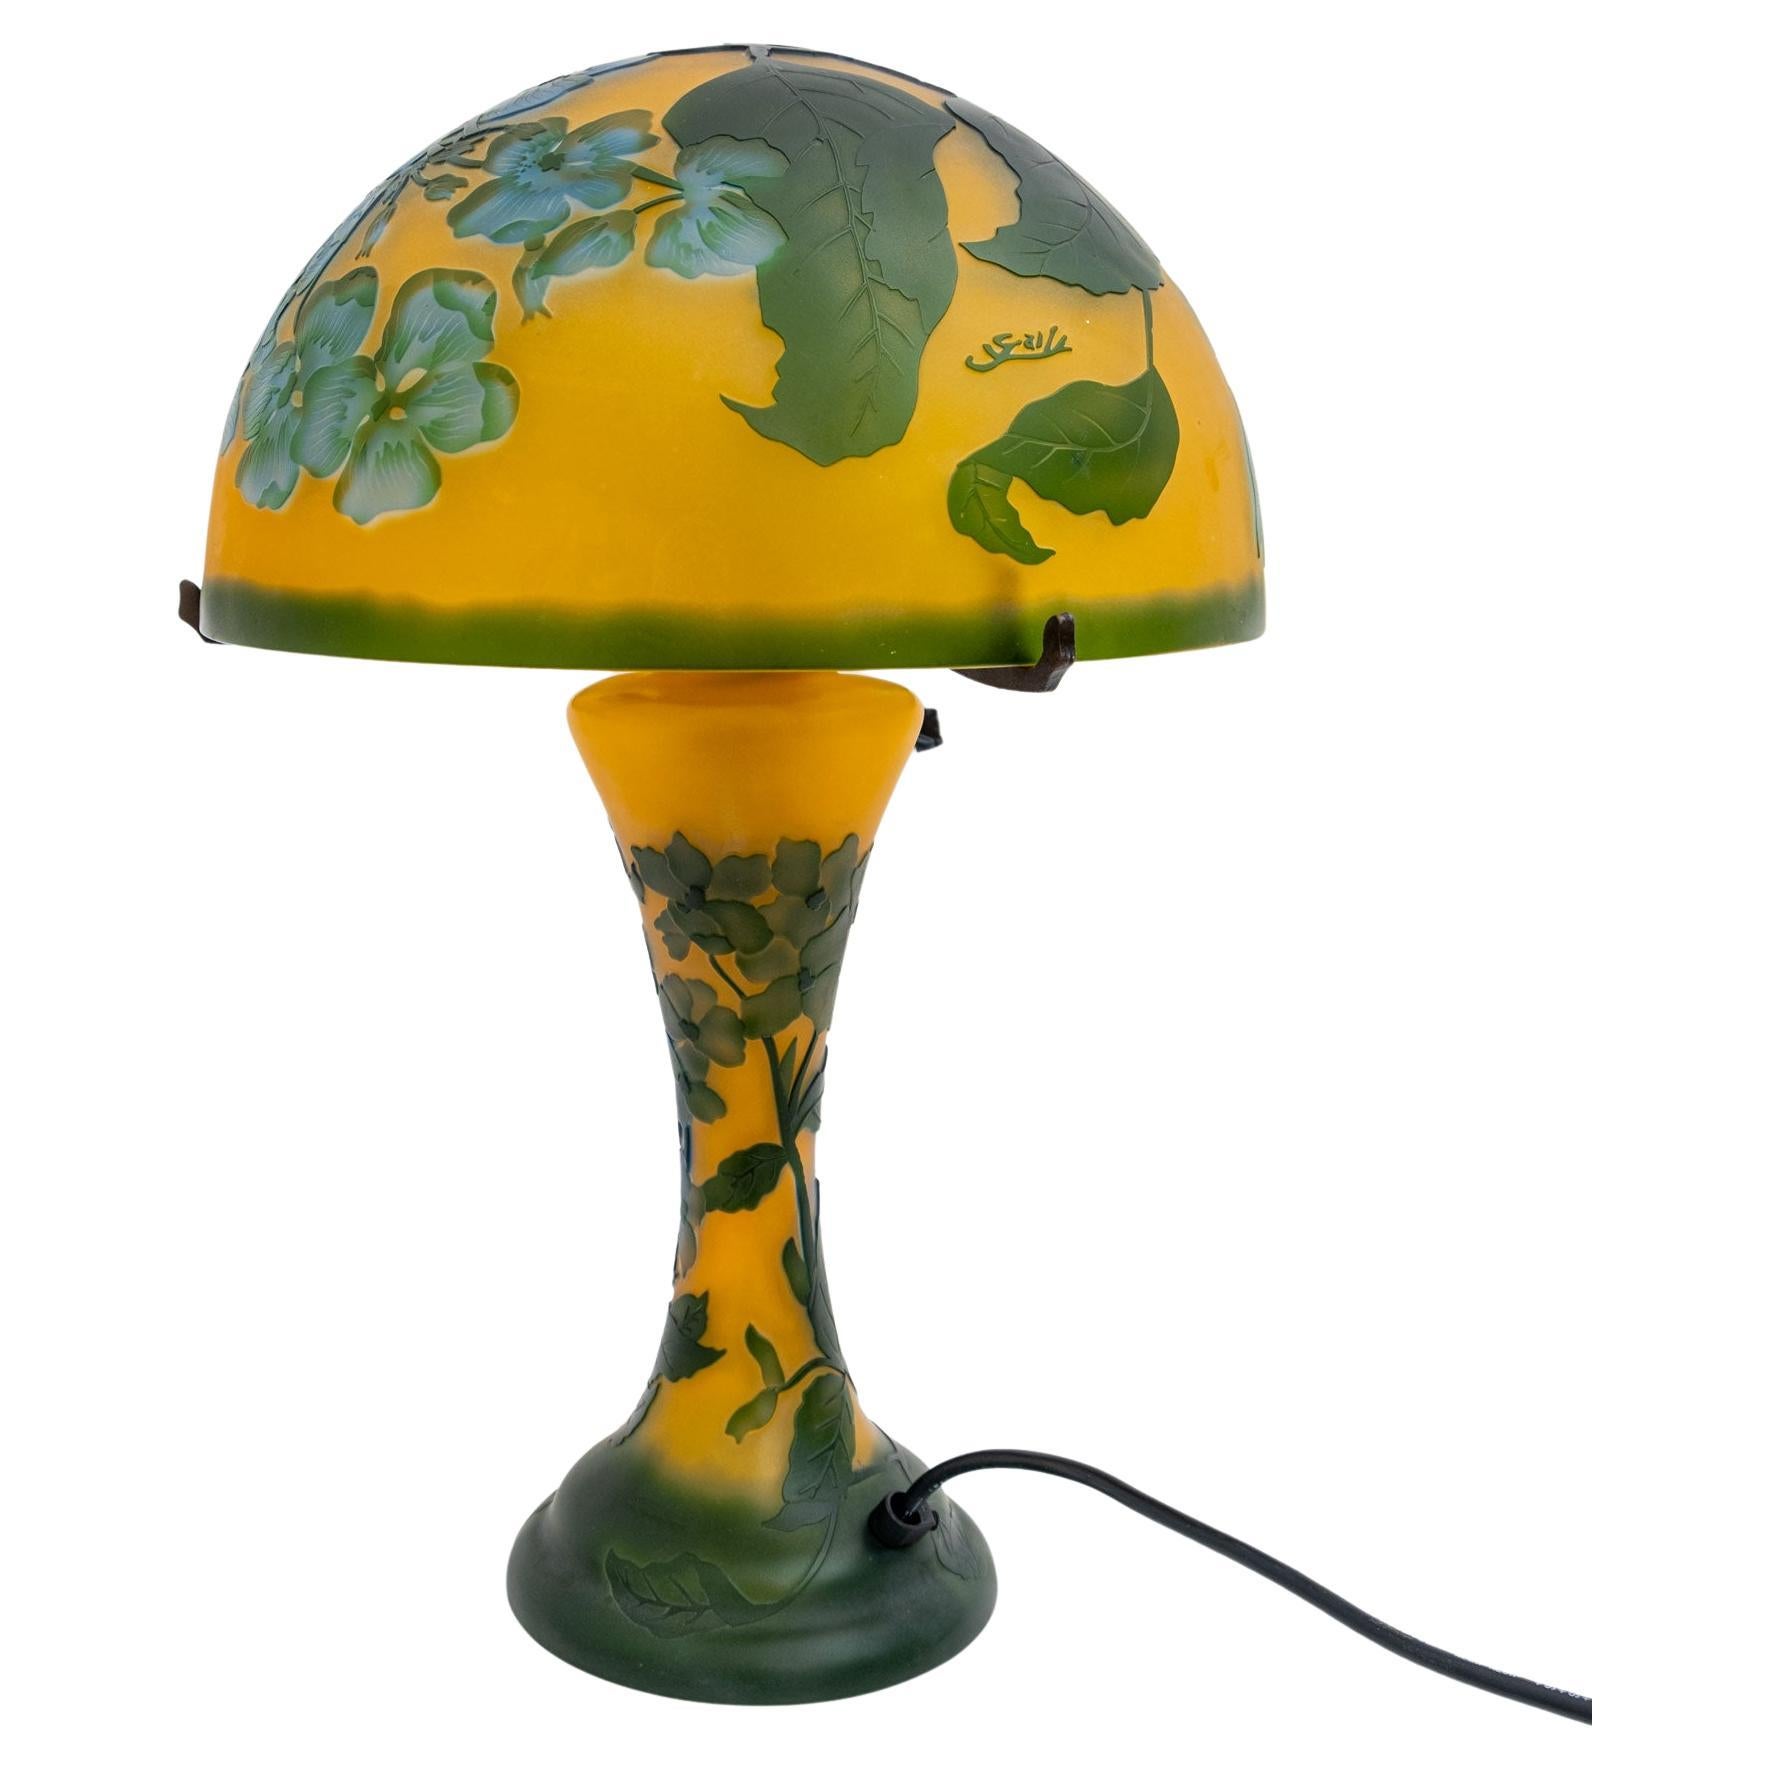 Art Nouveau Gallé Multi-Layer Glass with Flower Decor Mushroom Lamp